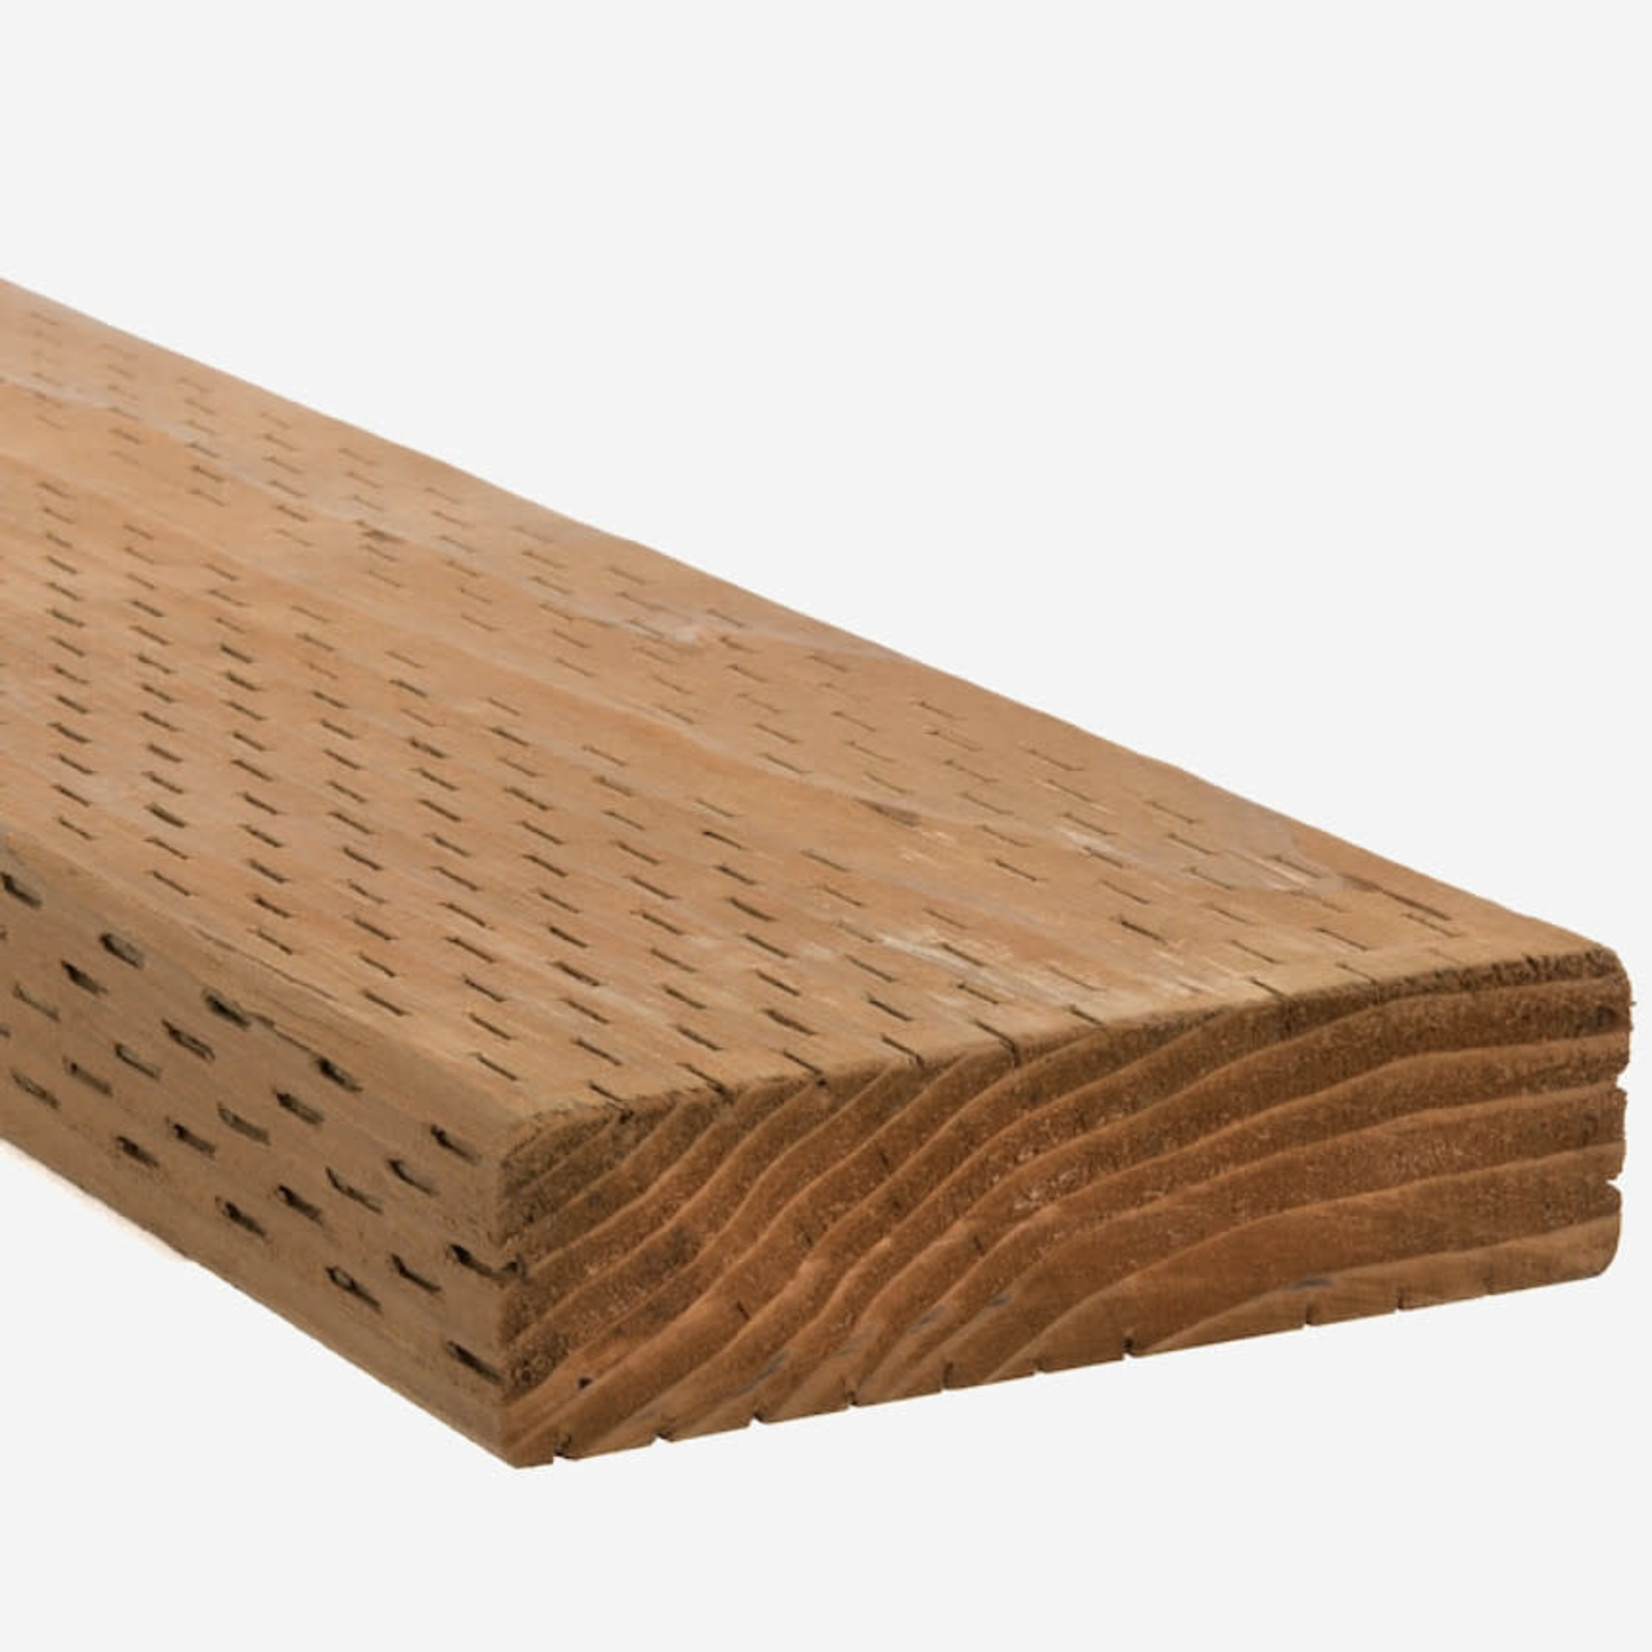 2 in. x 10 in. x 8 ft. Hem/Fir Pressure-Treated Lumber